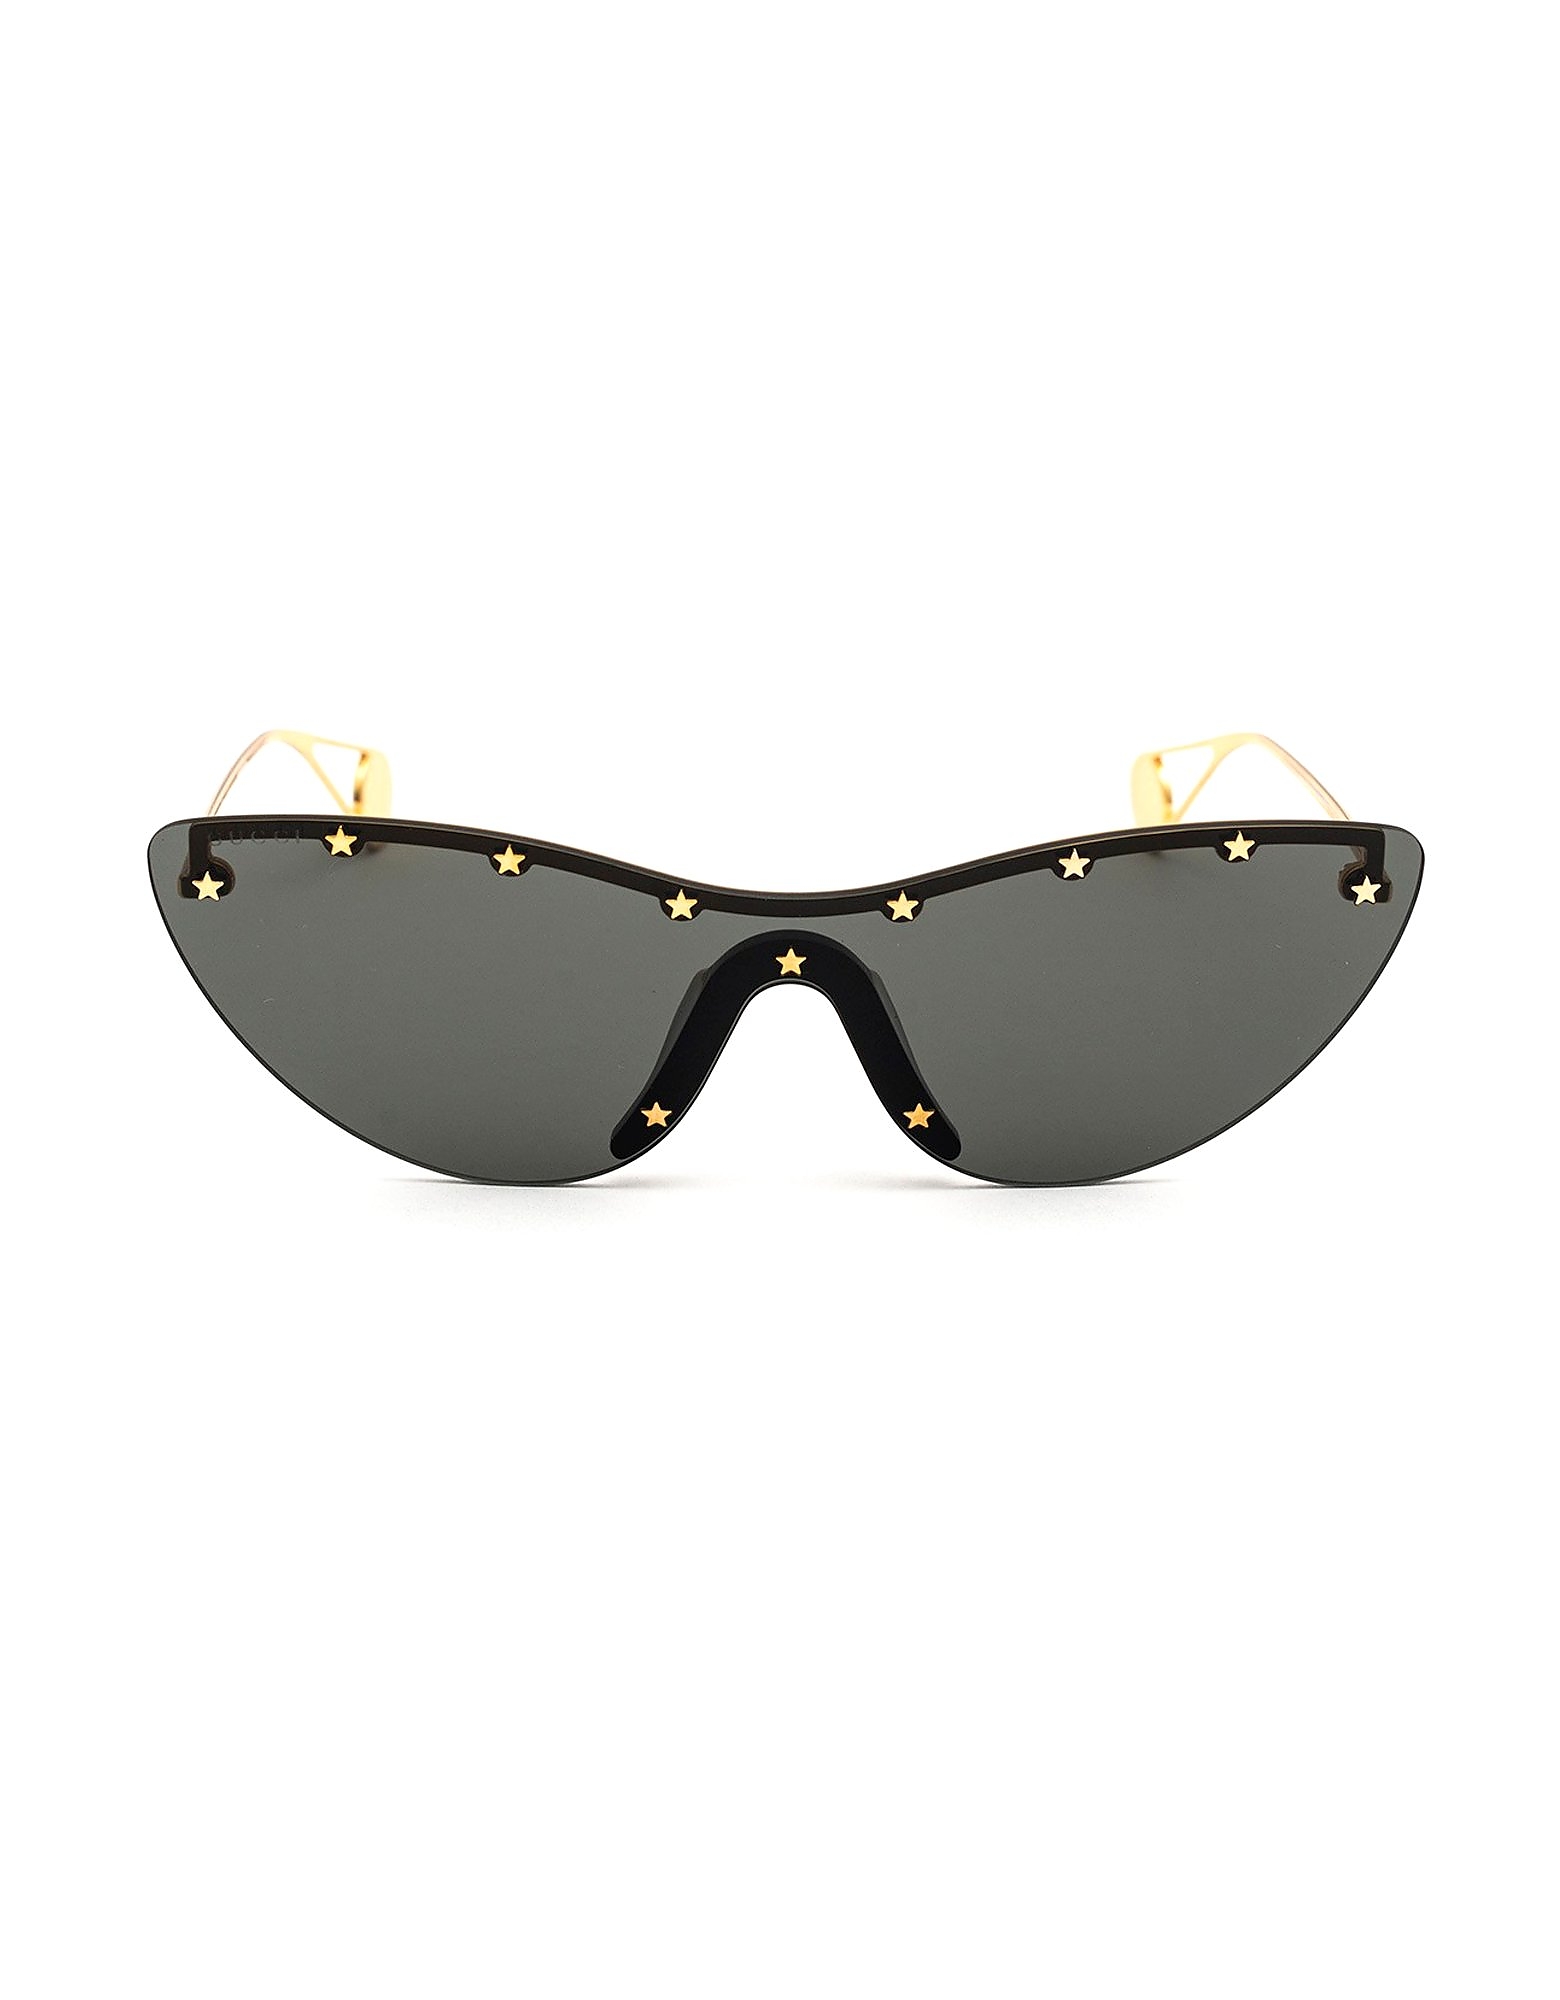 Gucci Sunglasses Black Women's Cat-Eye Sunglasses w/Stars